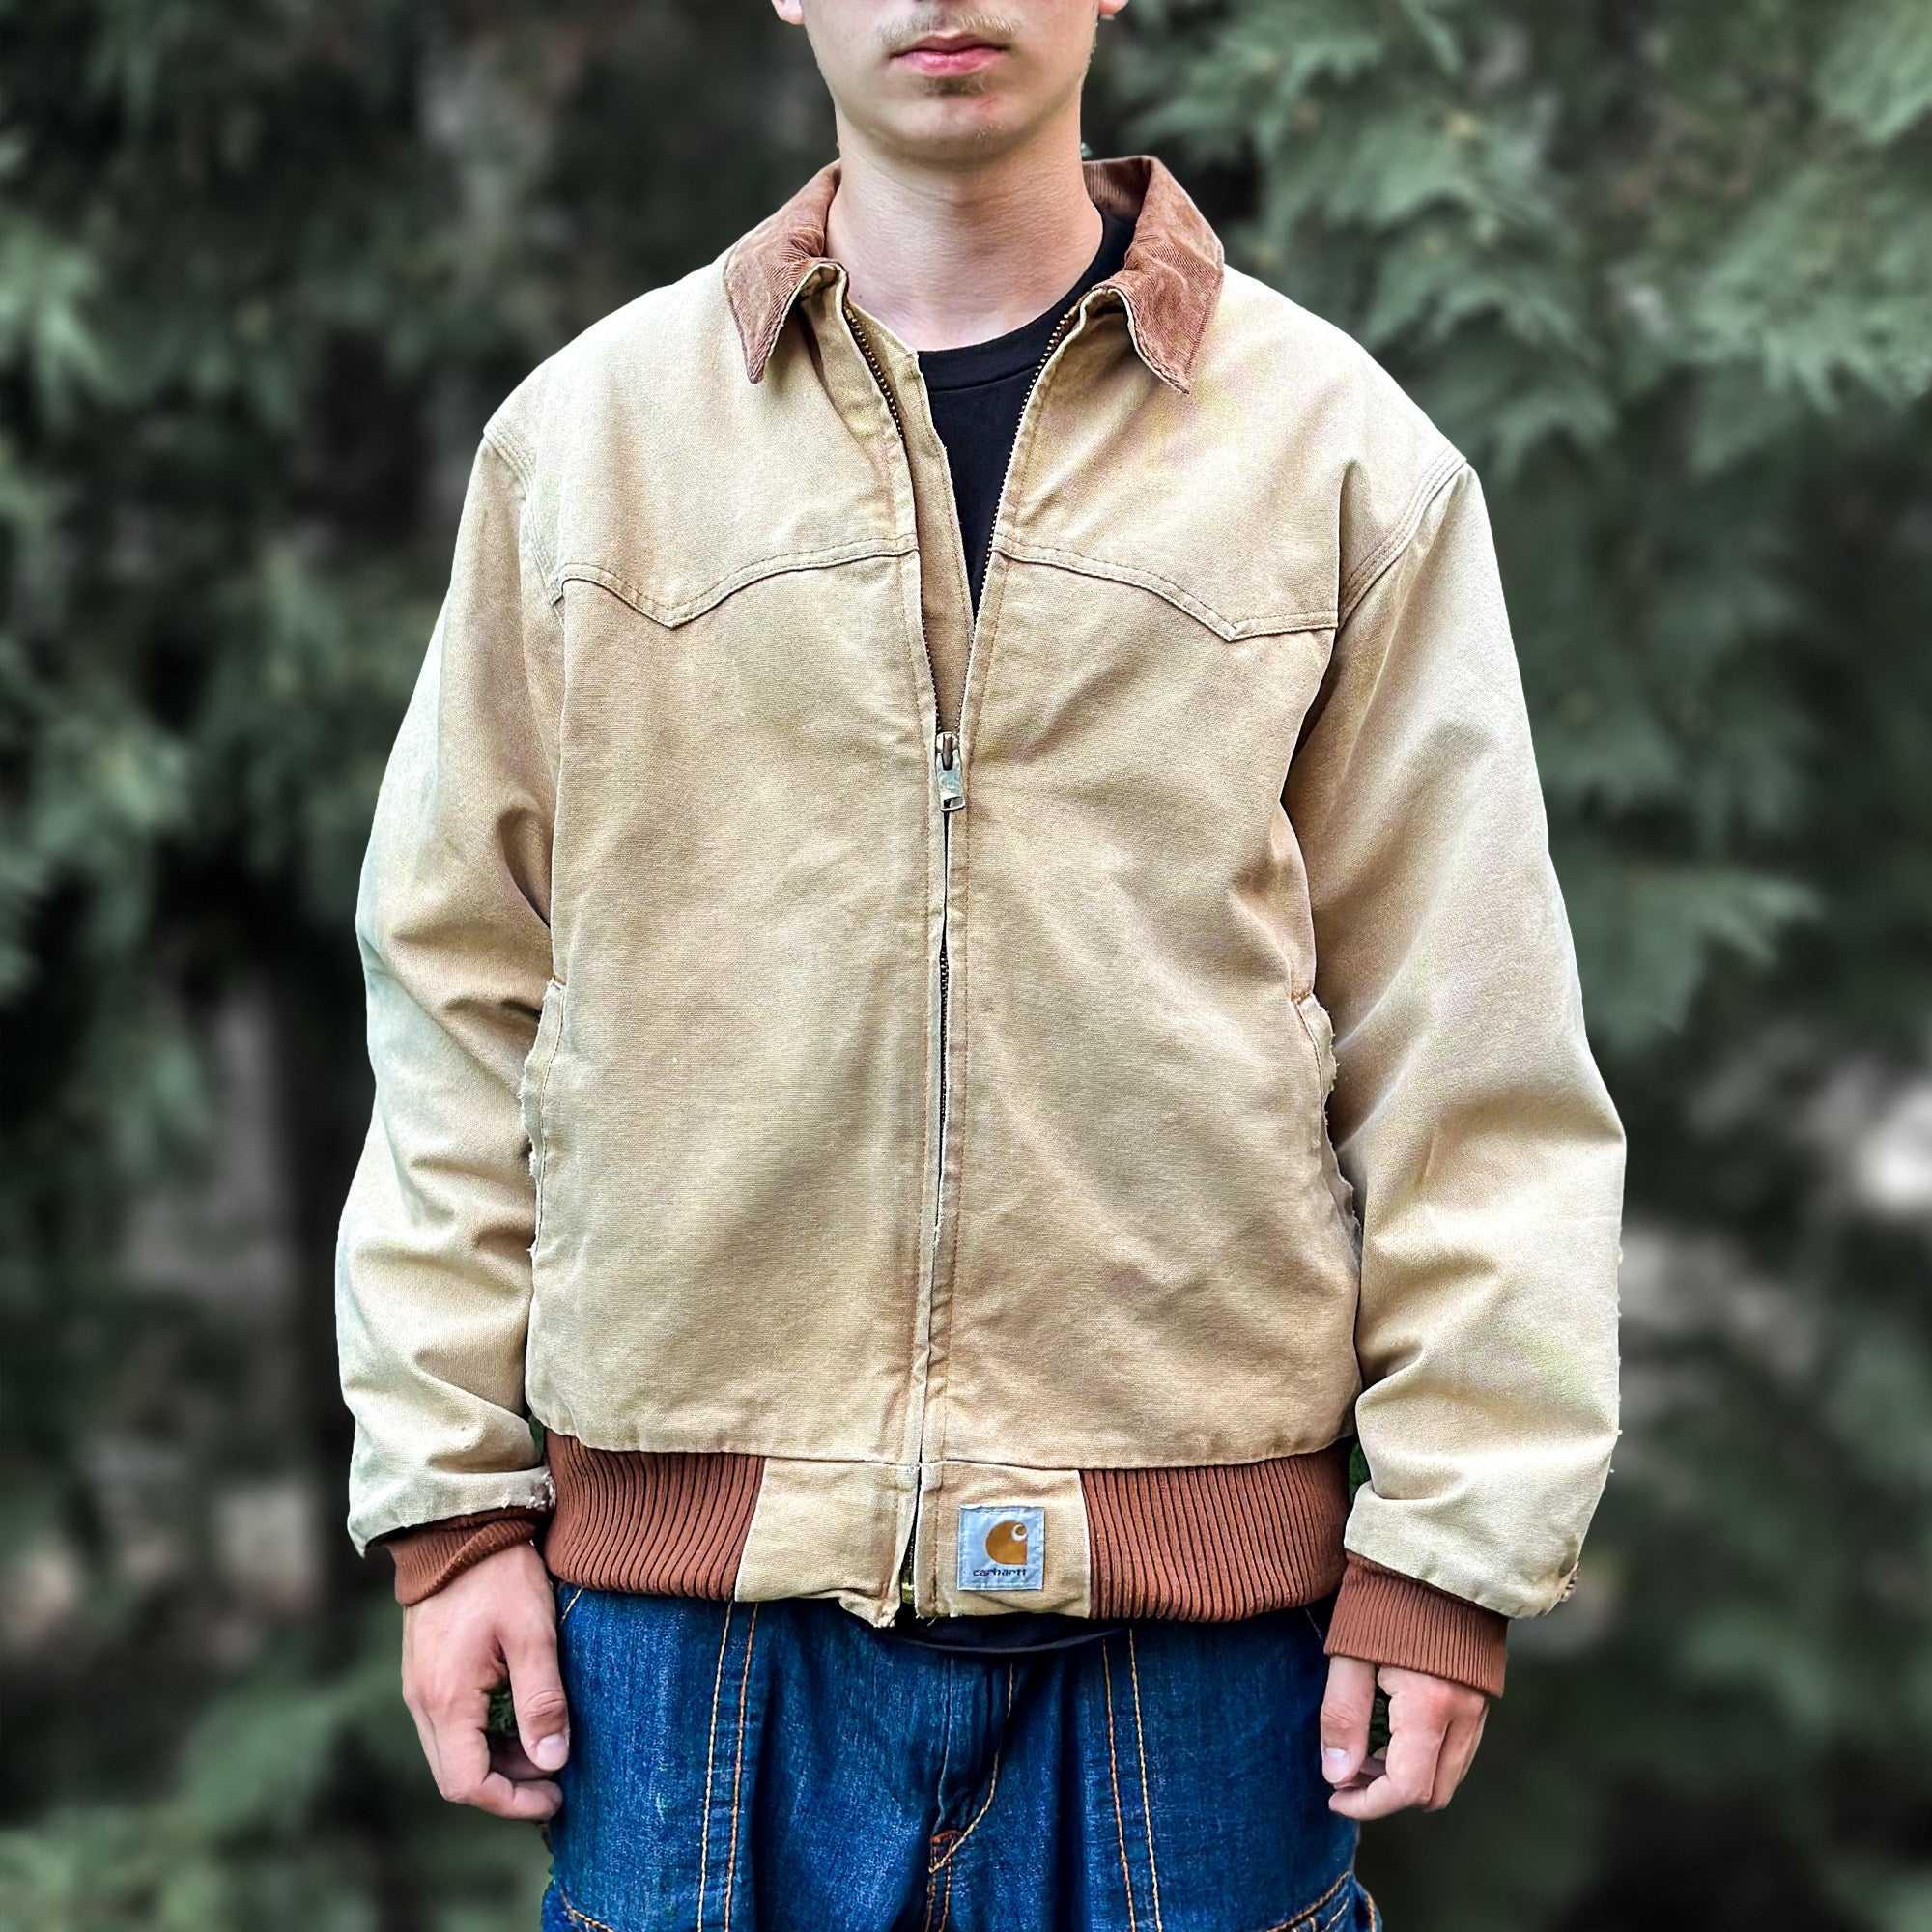 Man standing outside wearing a vintage Carhartt jacket